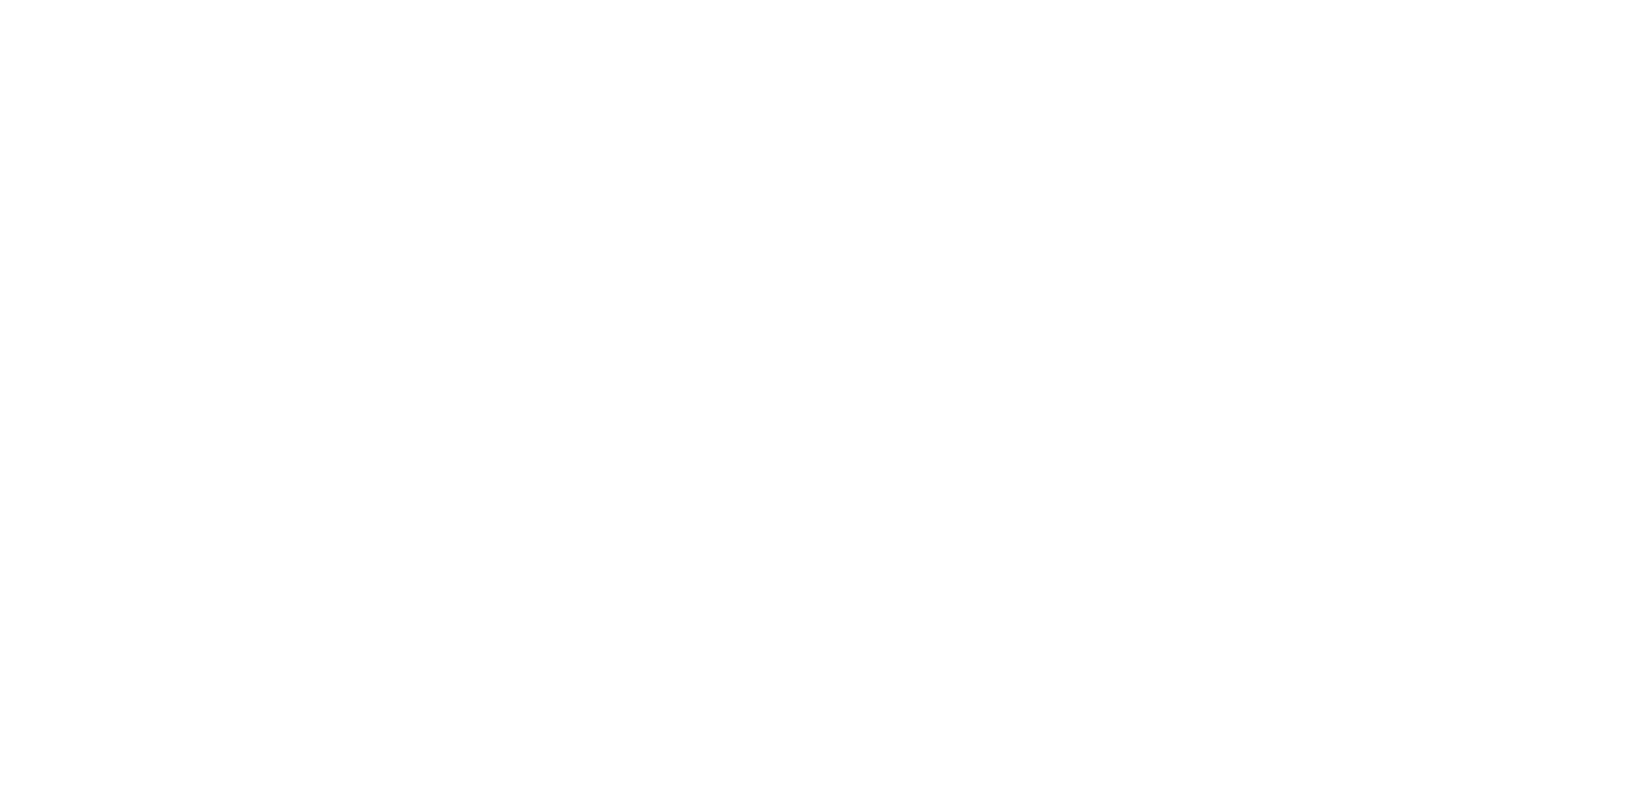 Big Sky kombucha